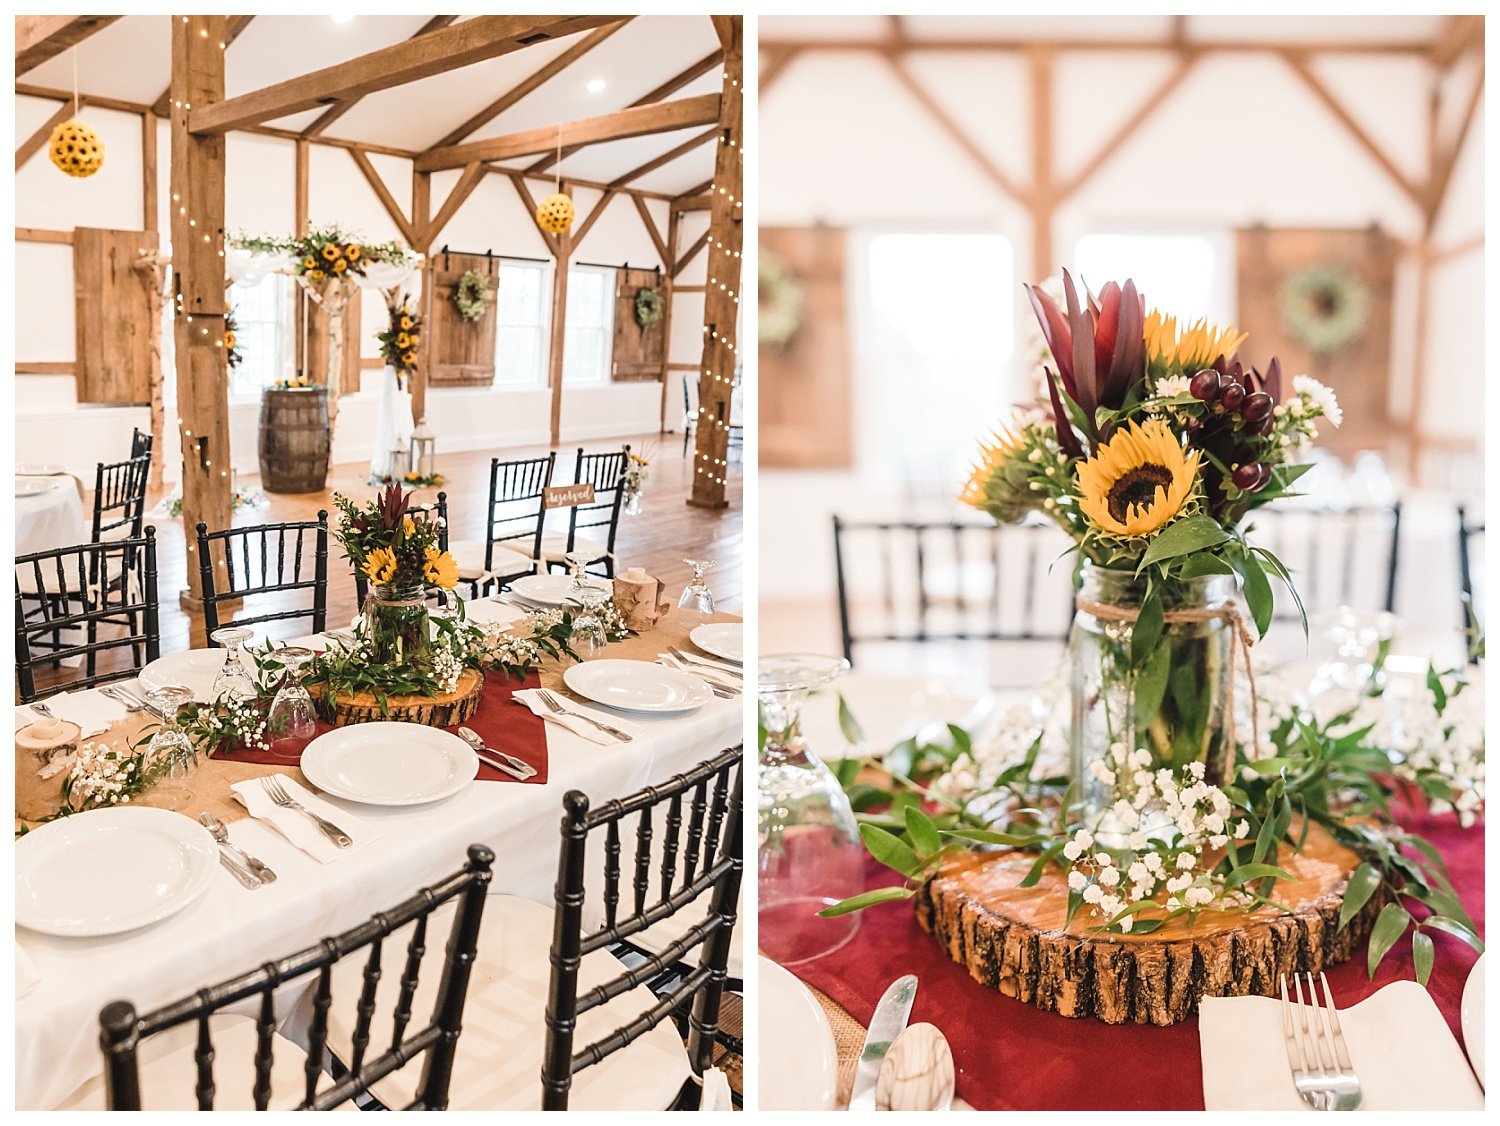 Osbornia Farm, Quarryville PA, wedding, barn wedding, rustic, sunflowers, reception venue